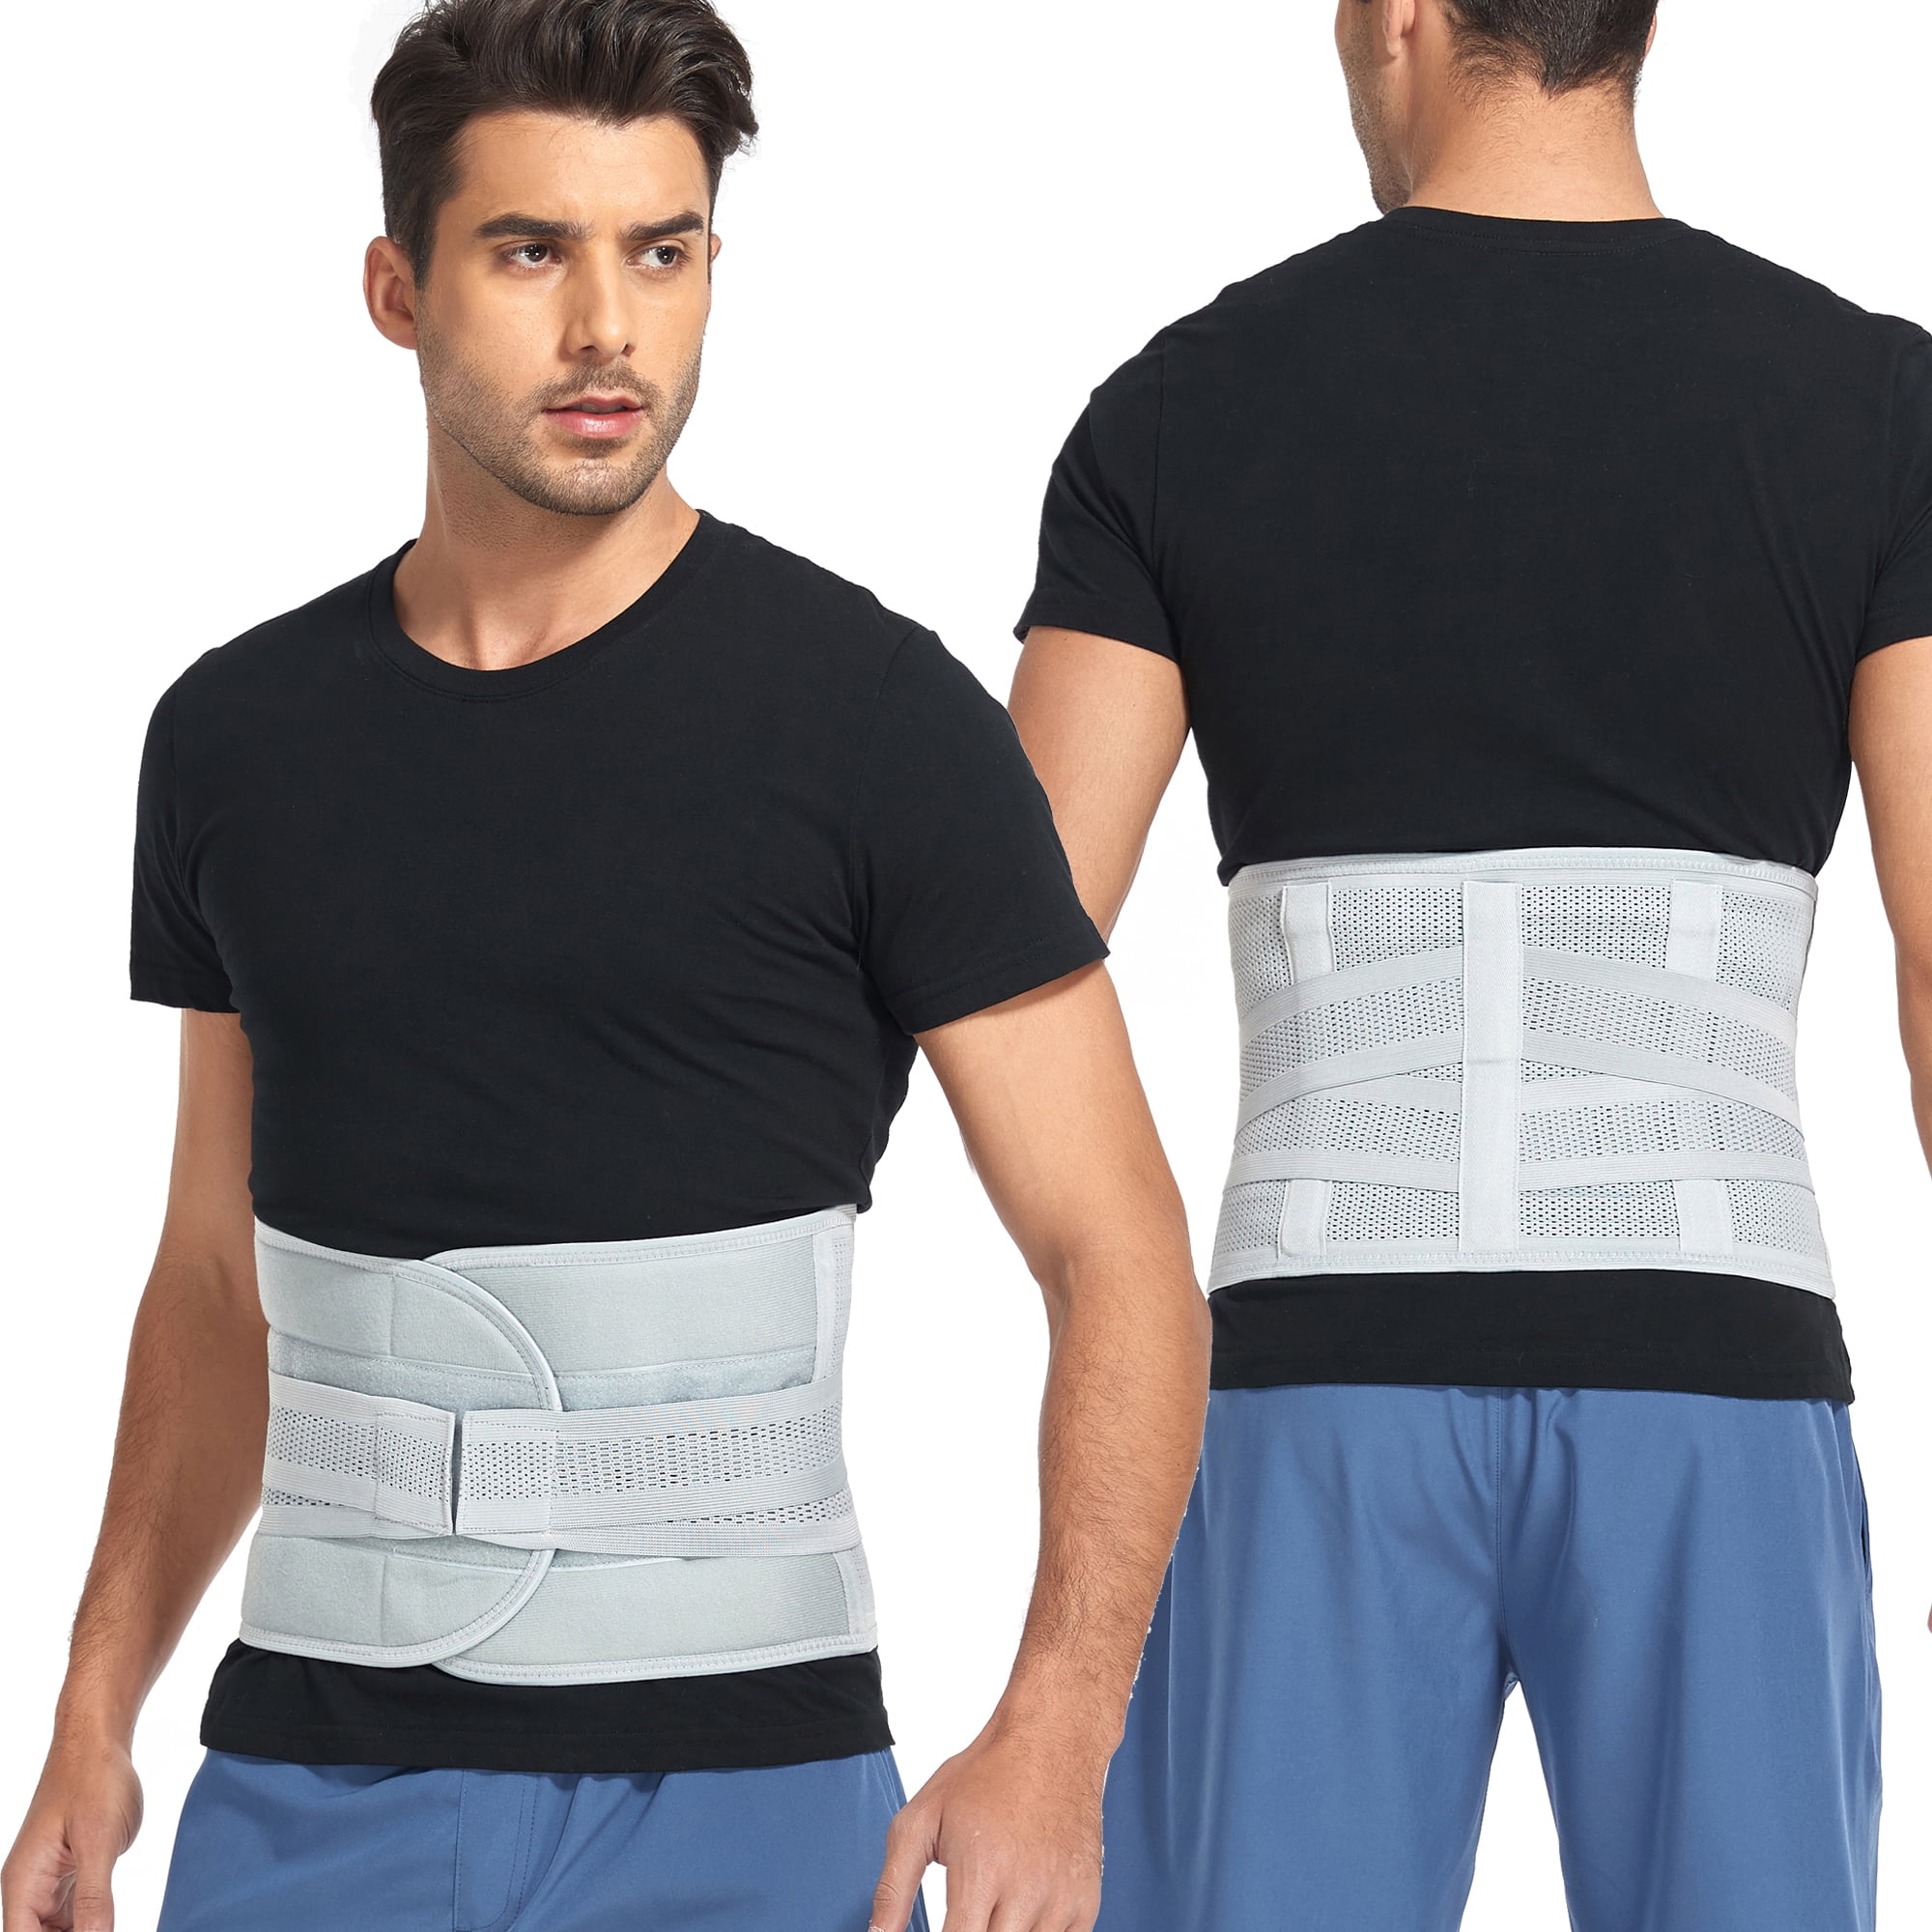 Back Pain Belt